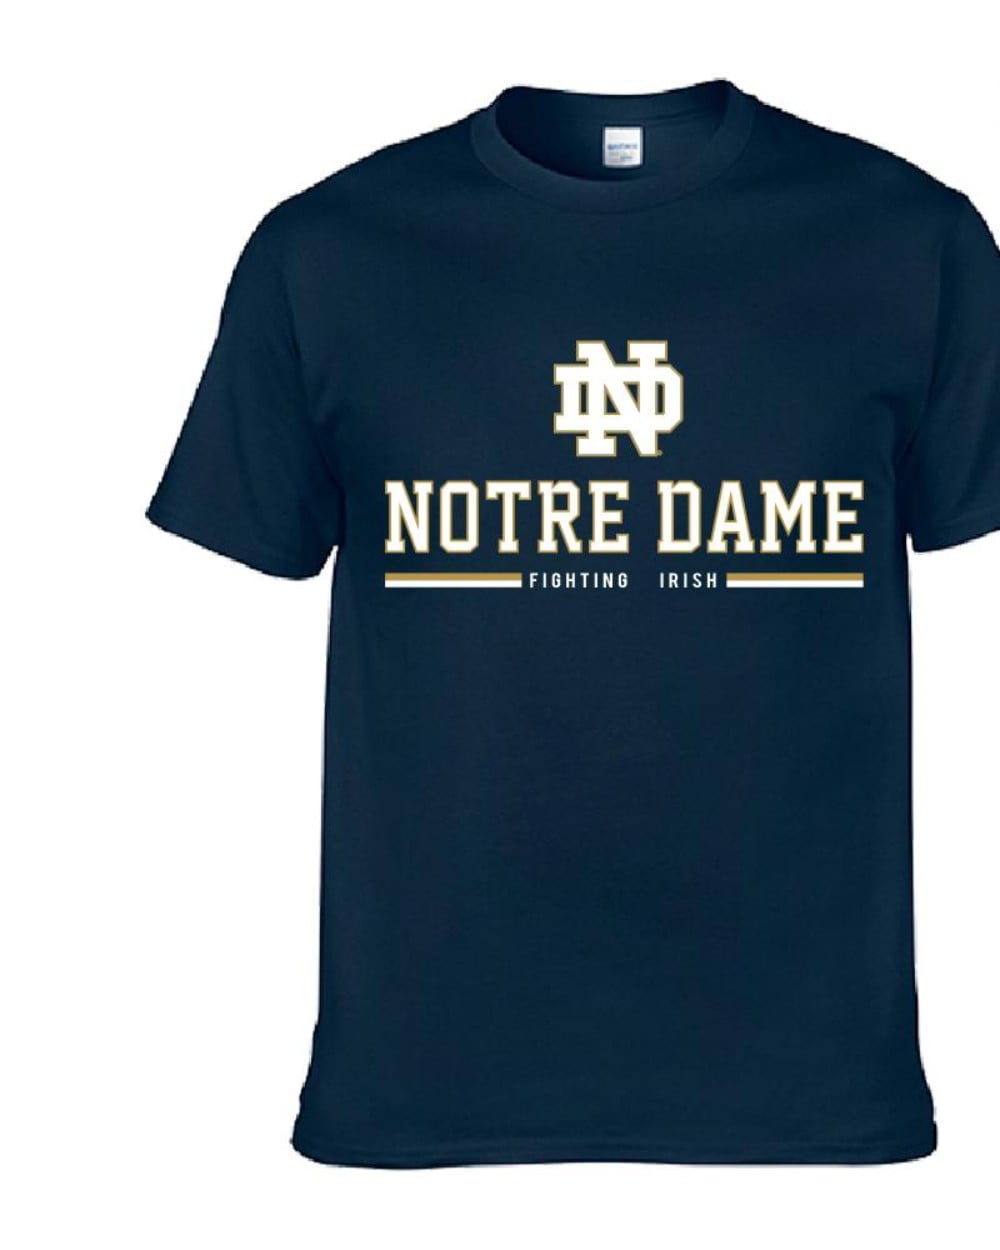 Brand ND Logo Short-Sleeved T-Shirt(Youth Large), Official Notre/ Team Logo Design/Colors - Walmart.com